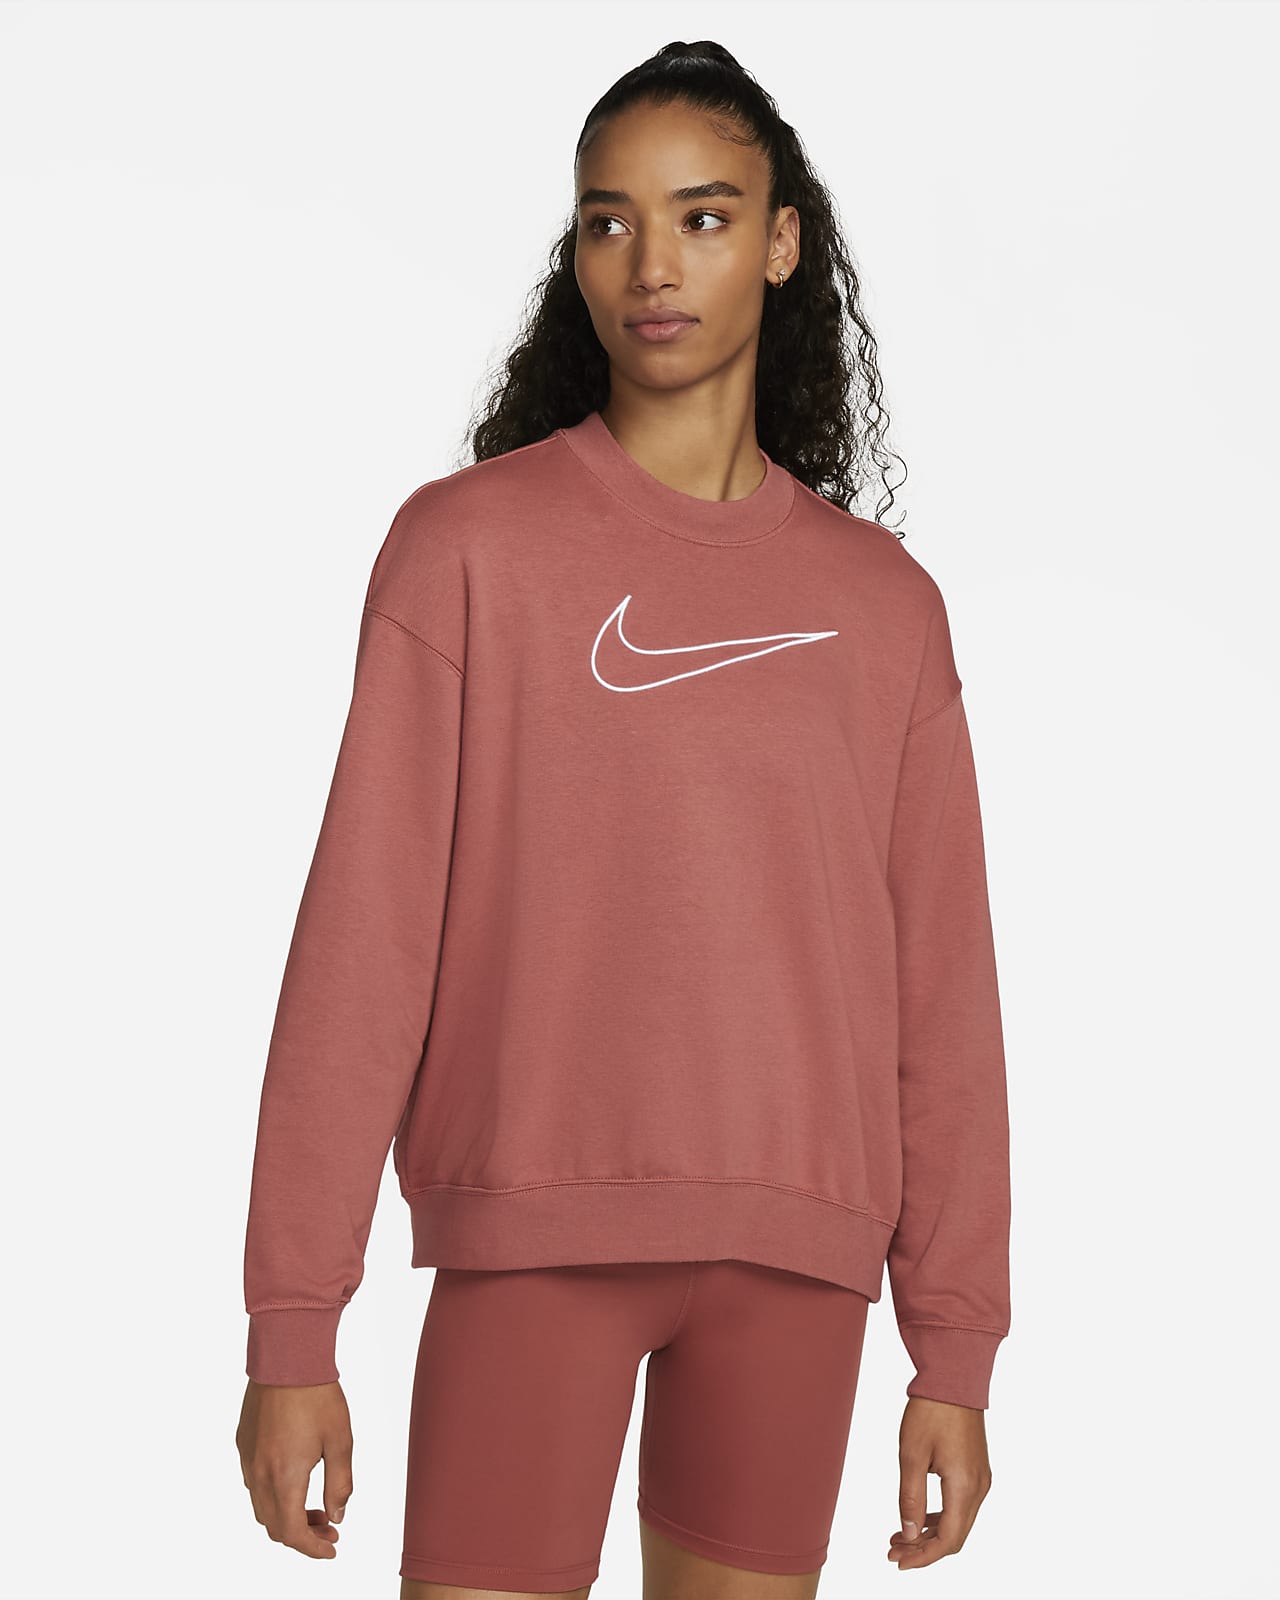 Nike Dri-FIT Get Fit Women's Graphic Crewneck Sweatshirt.